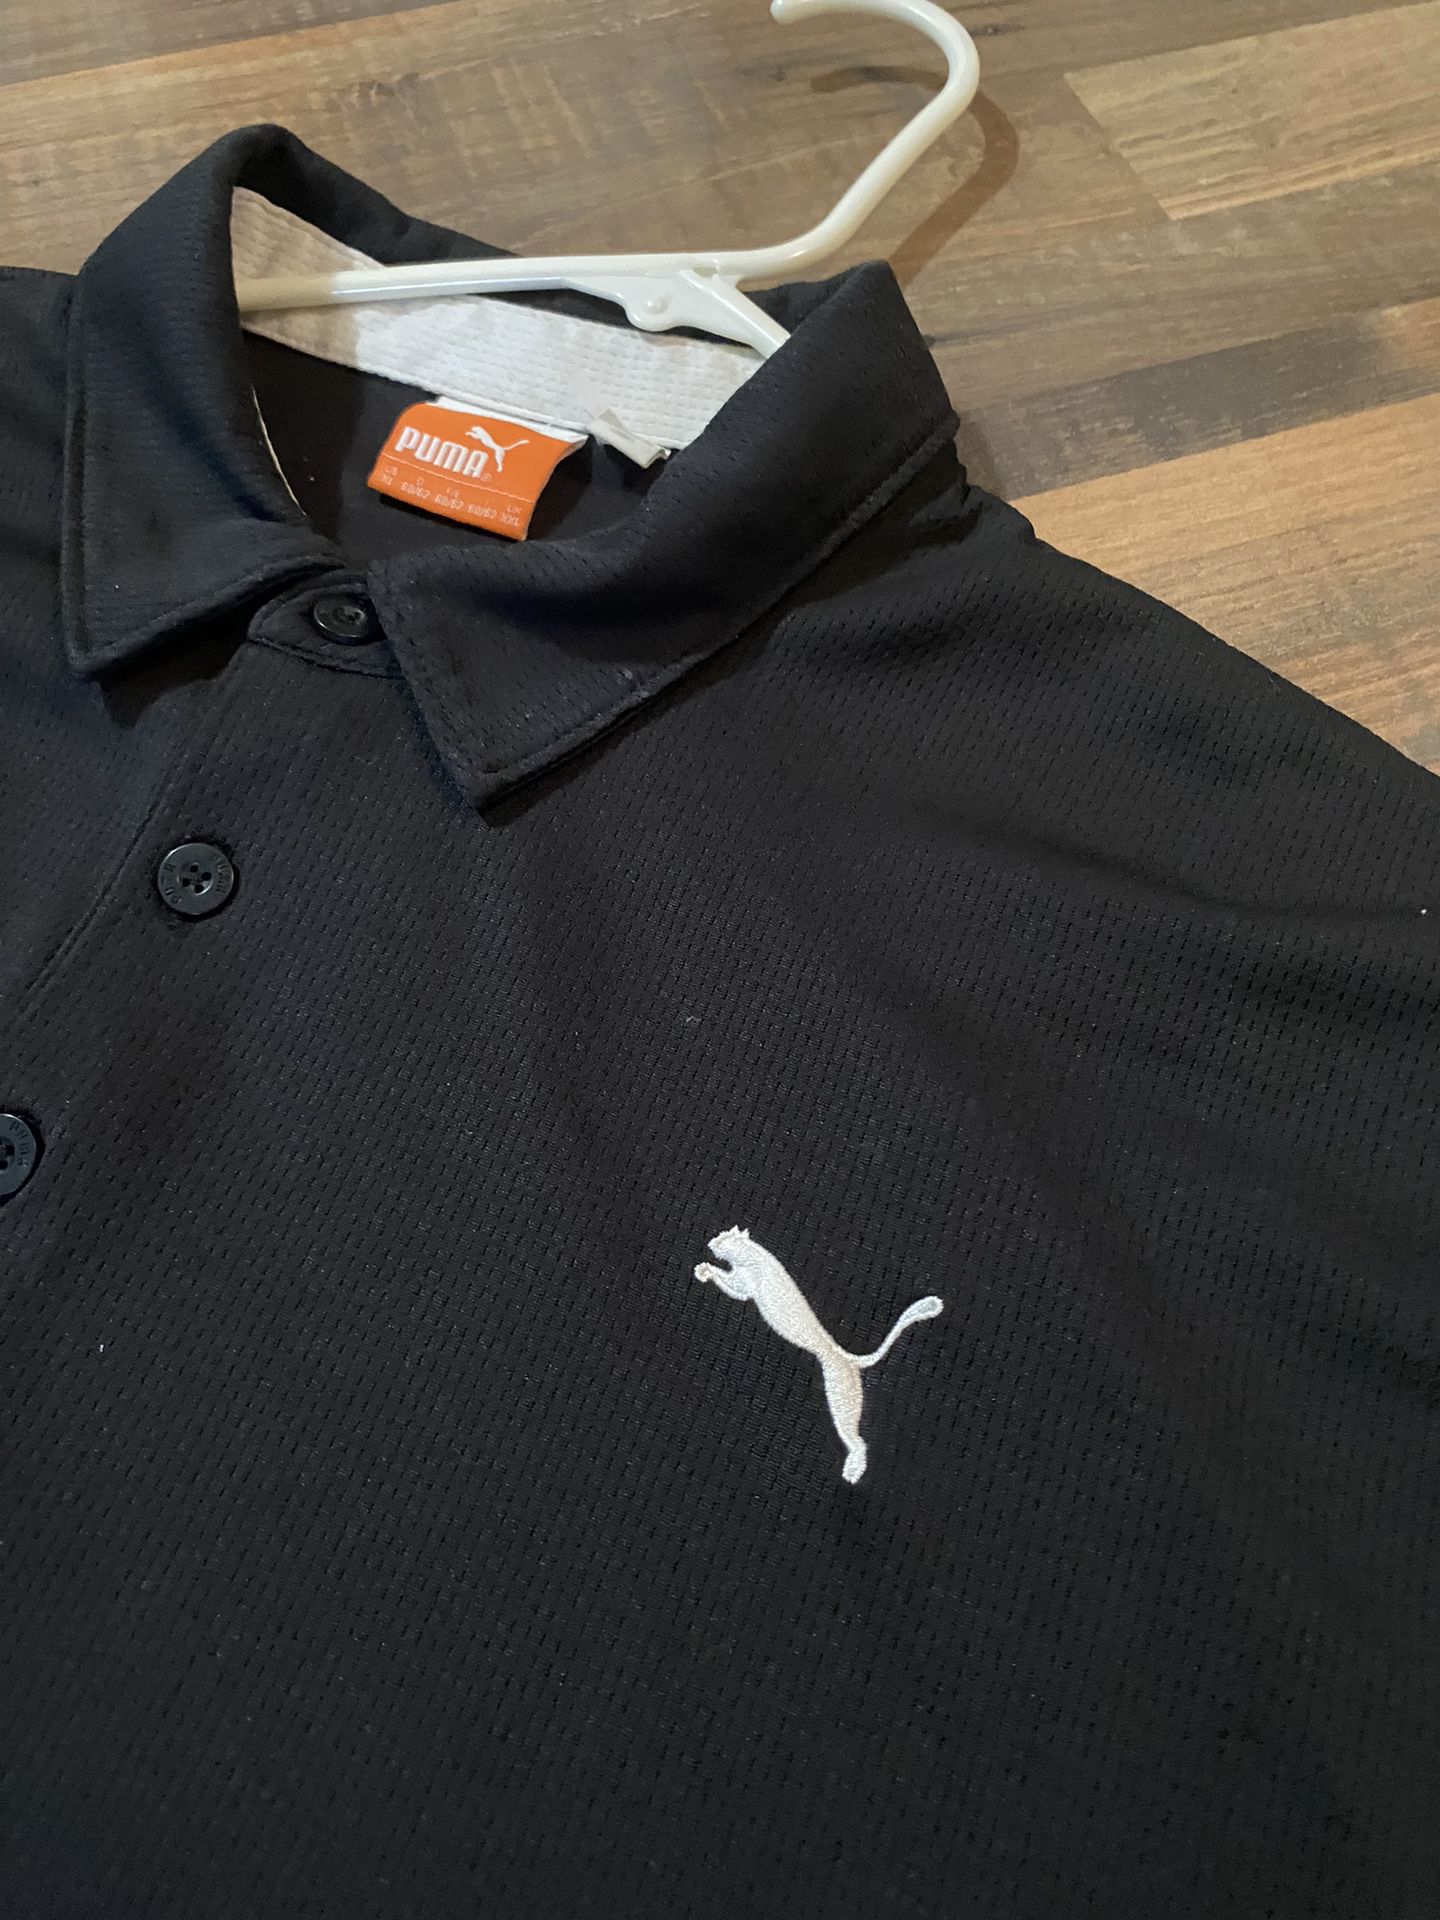 Puma Golf Polo Shirt Size XL